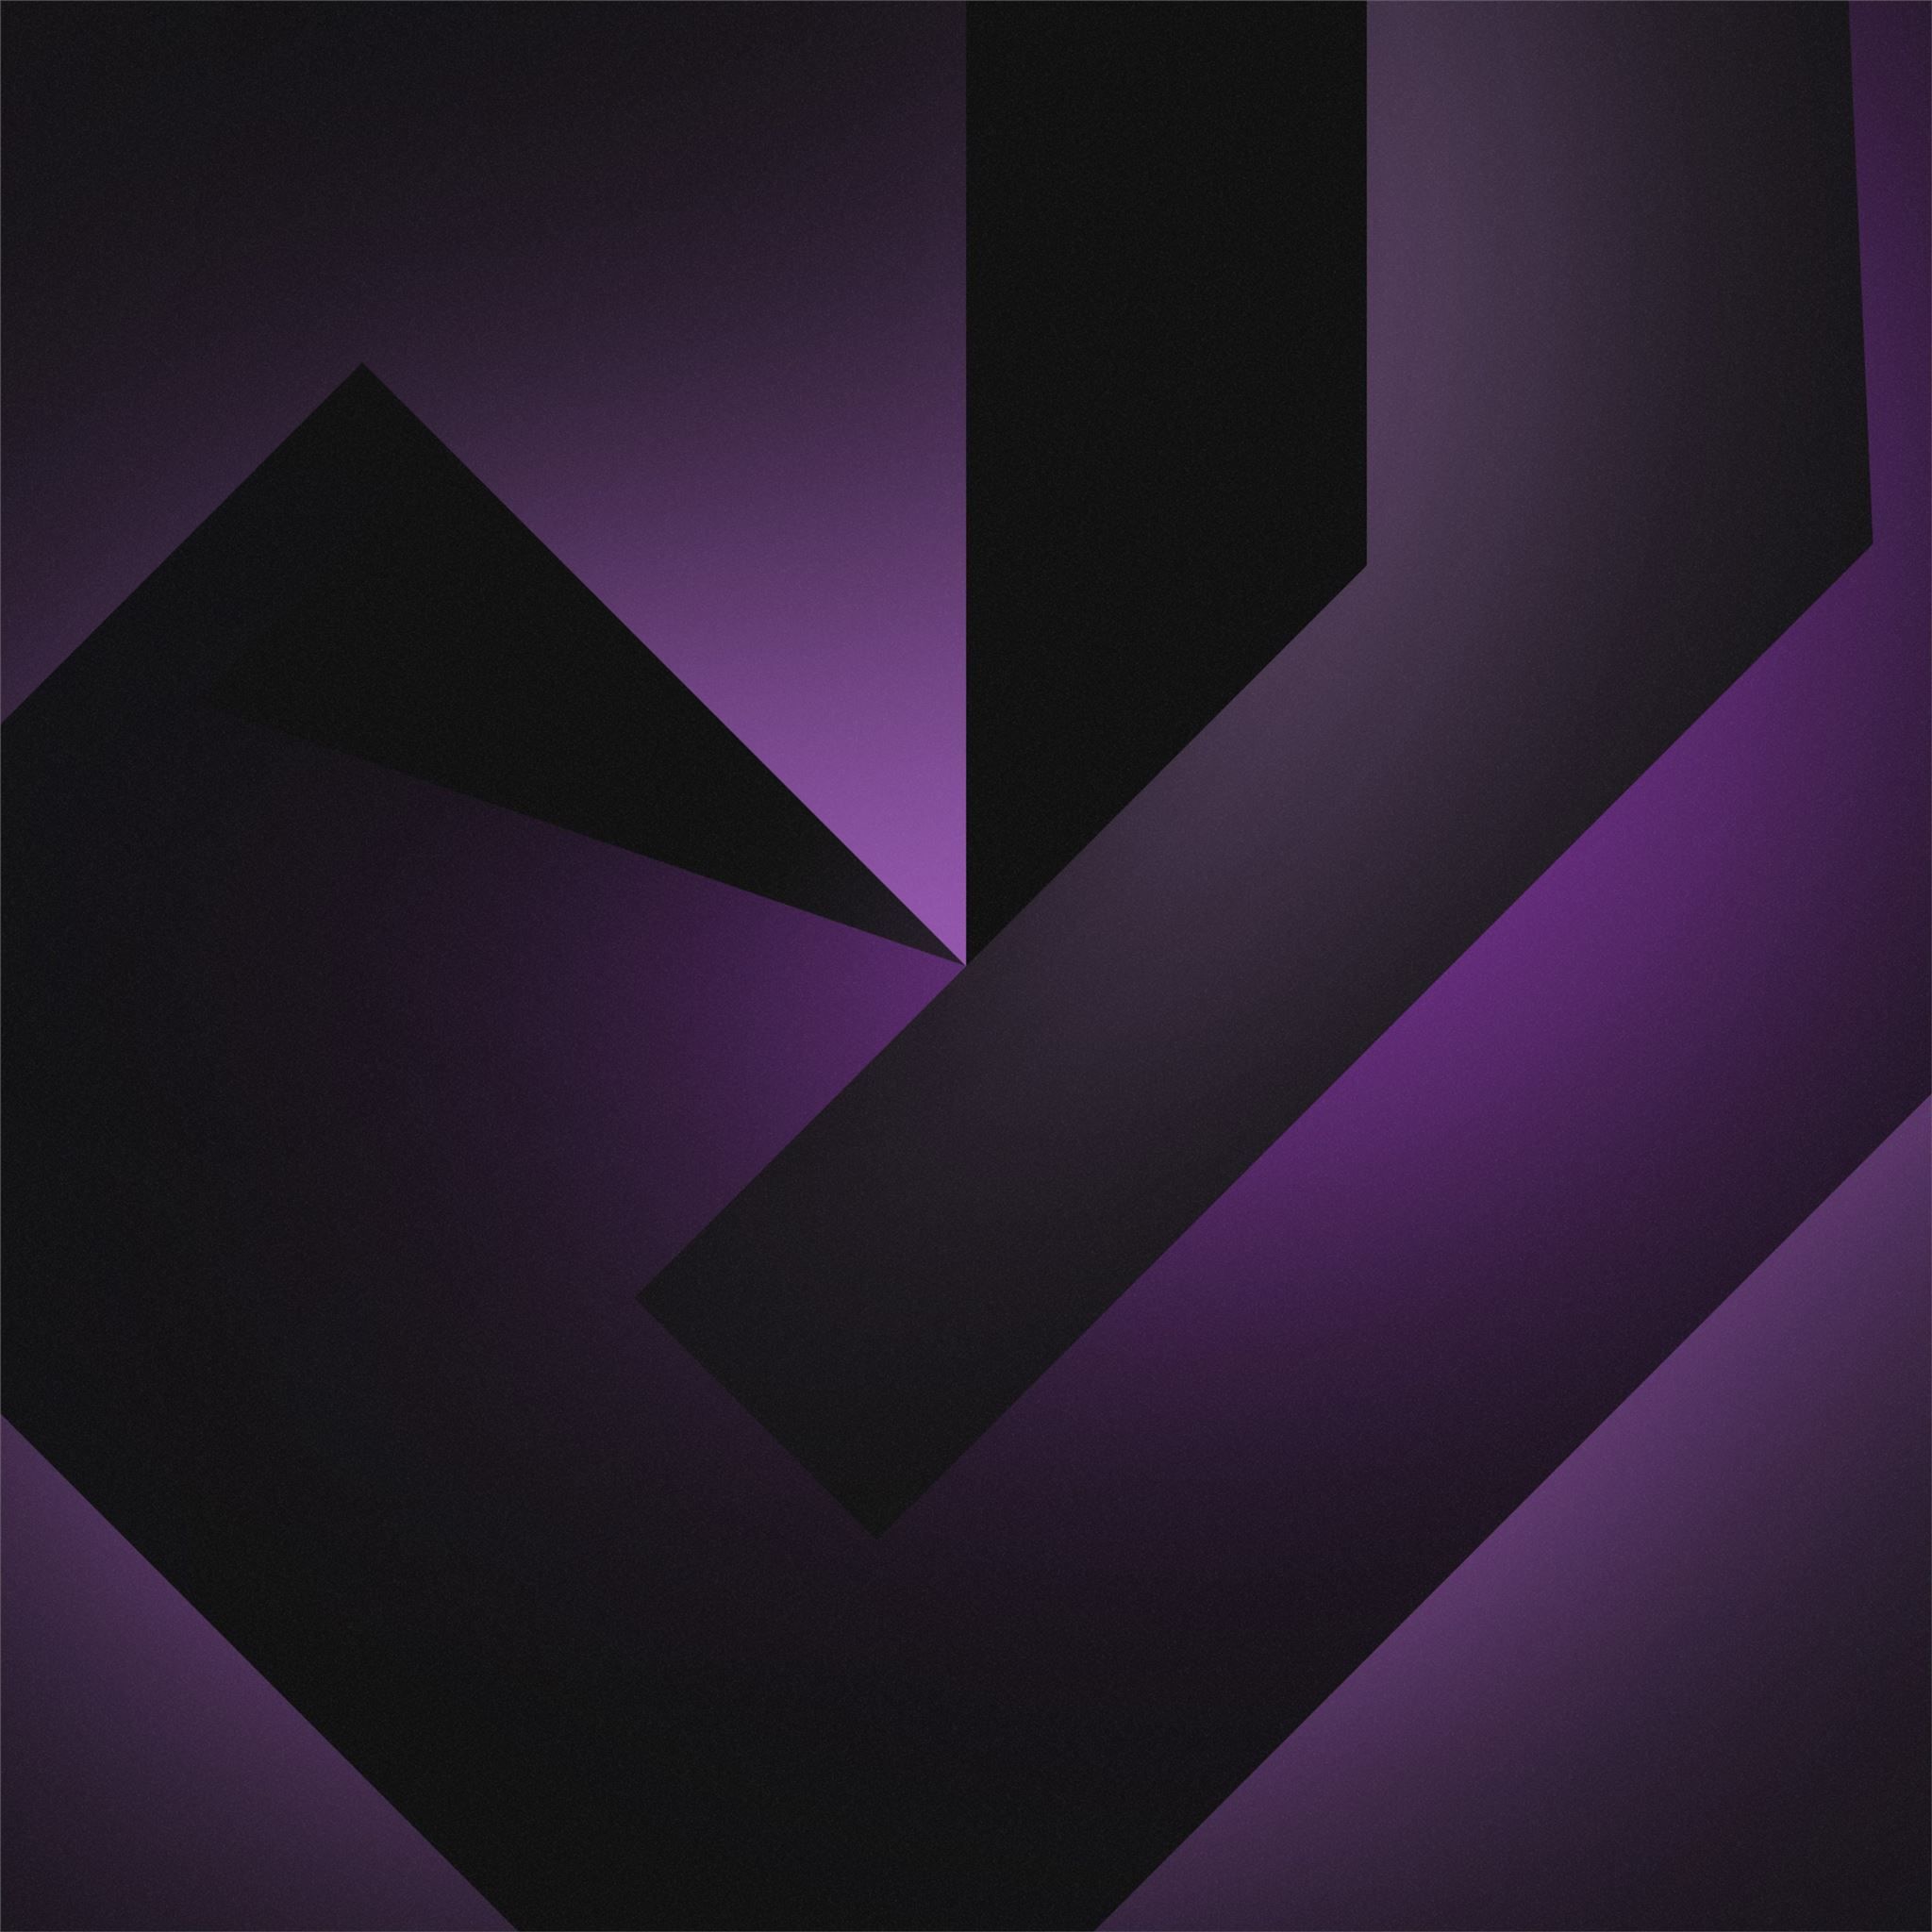 abstract dark purple 4k iPad Pro Wallpaper Free Download